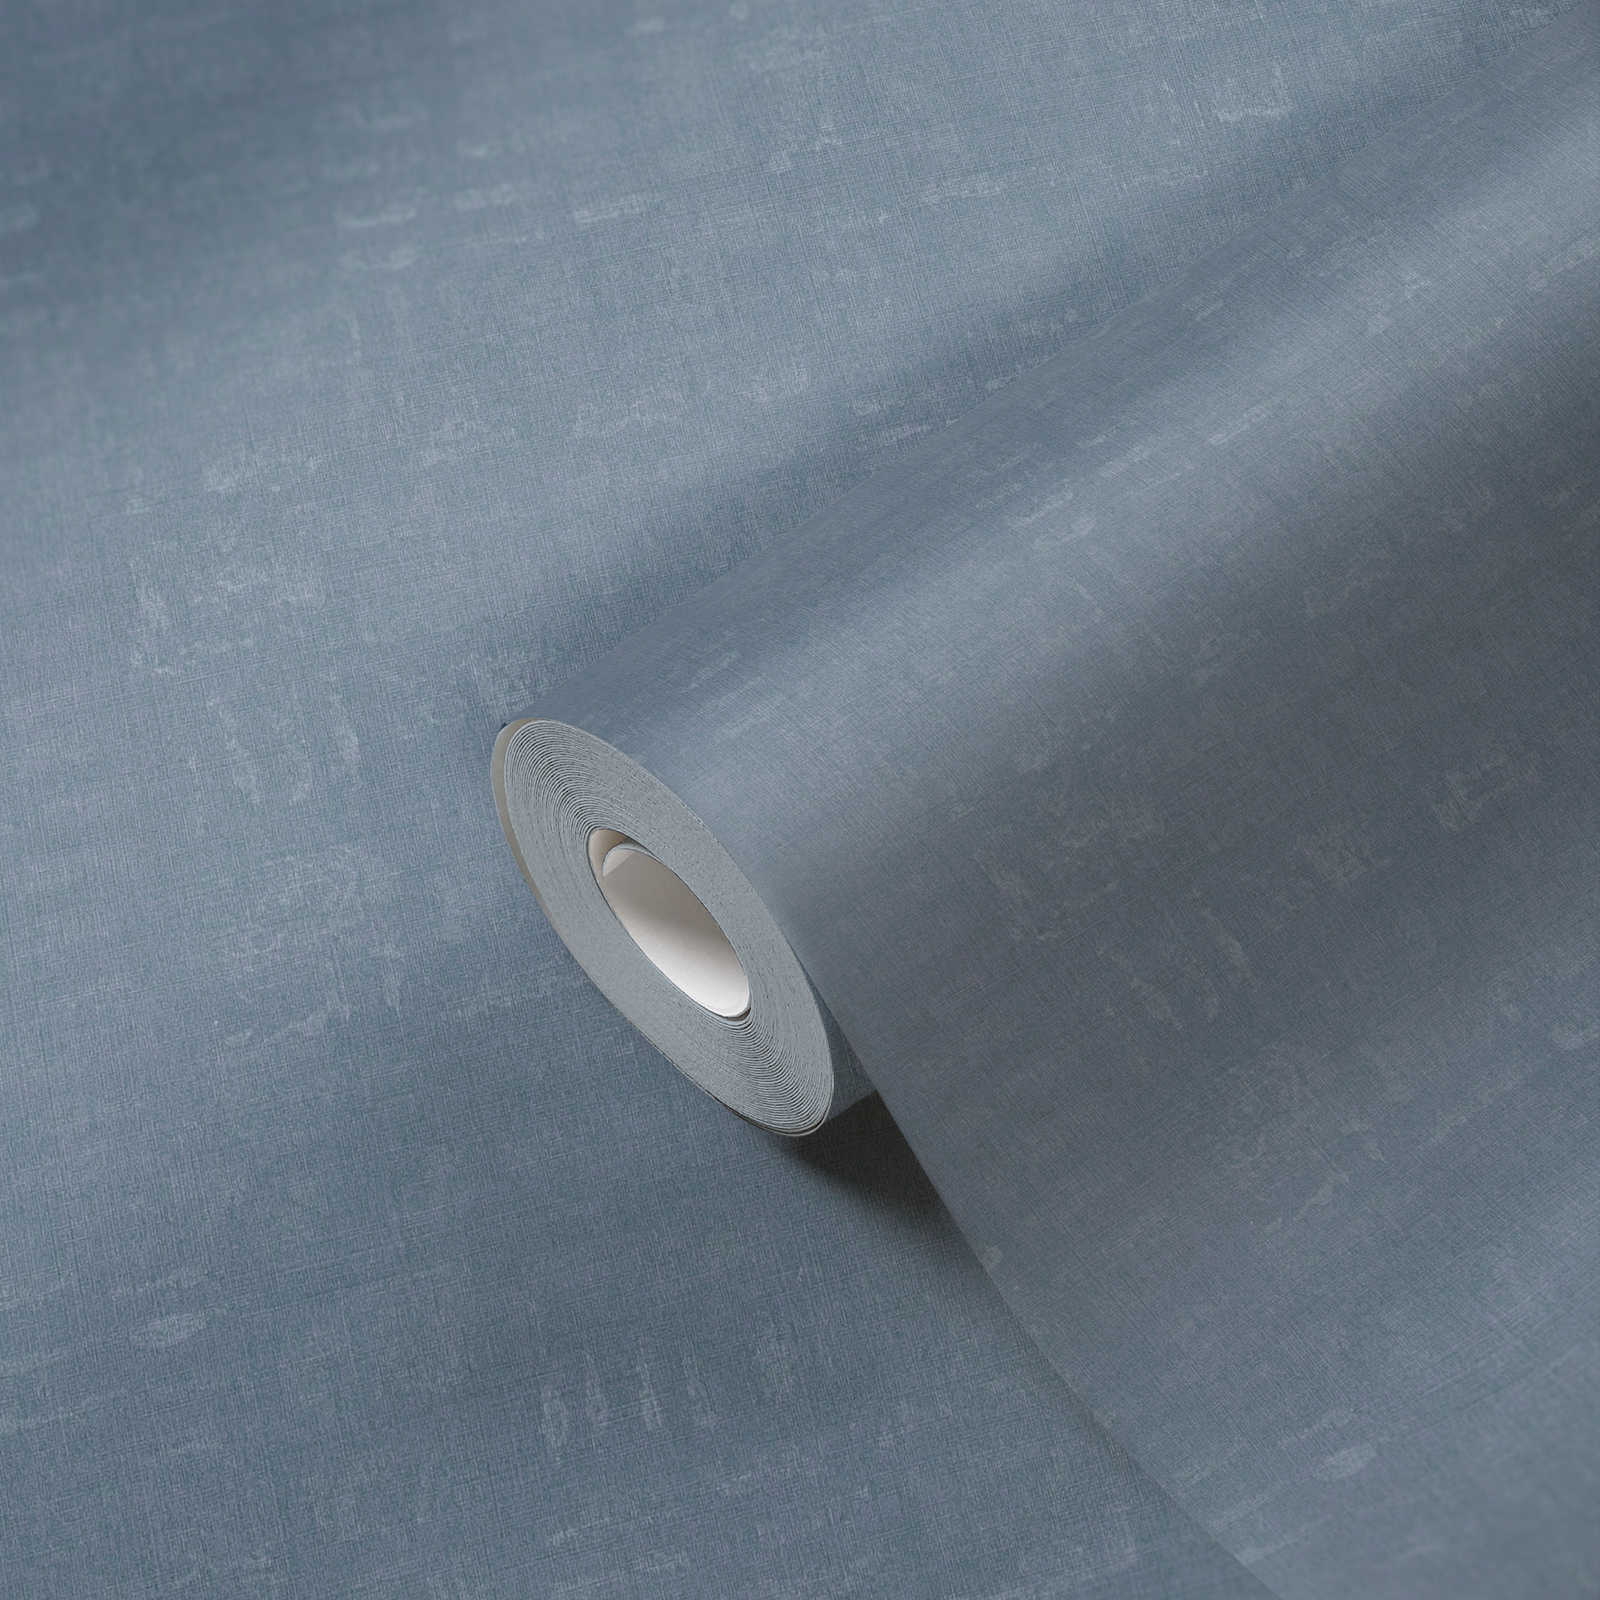             Melange wallpaper plain with structure design - blue
        